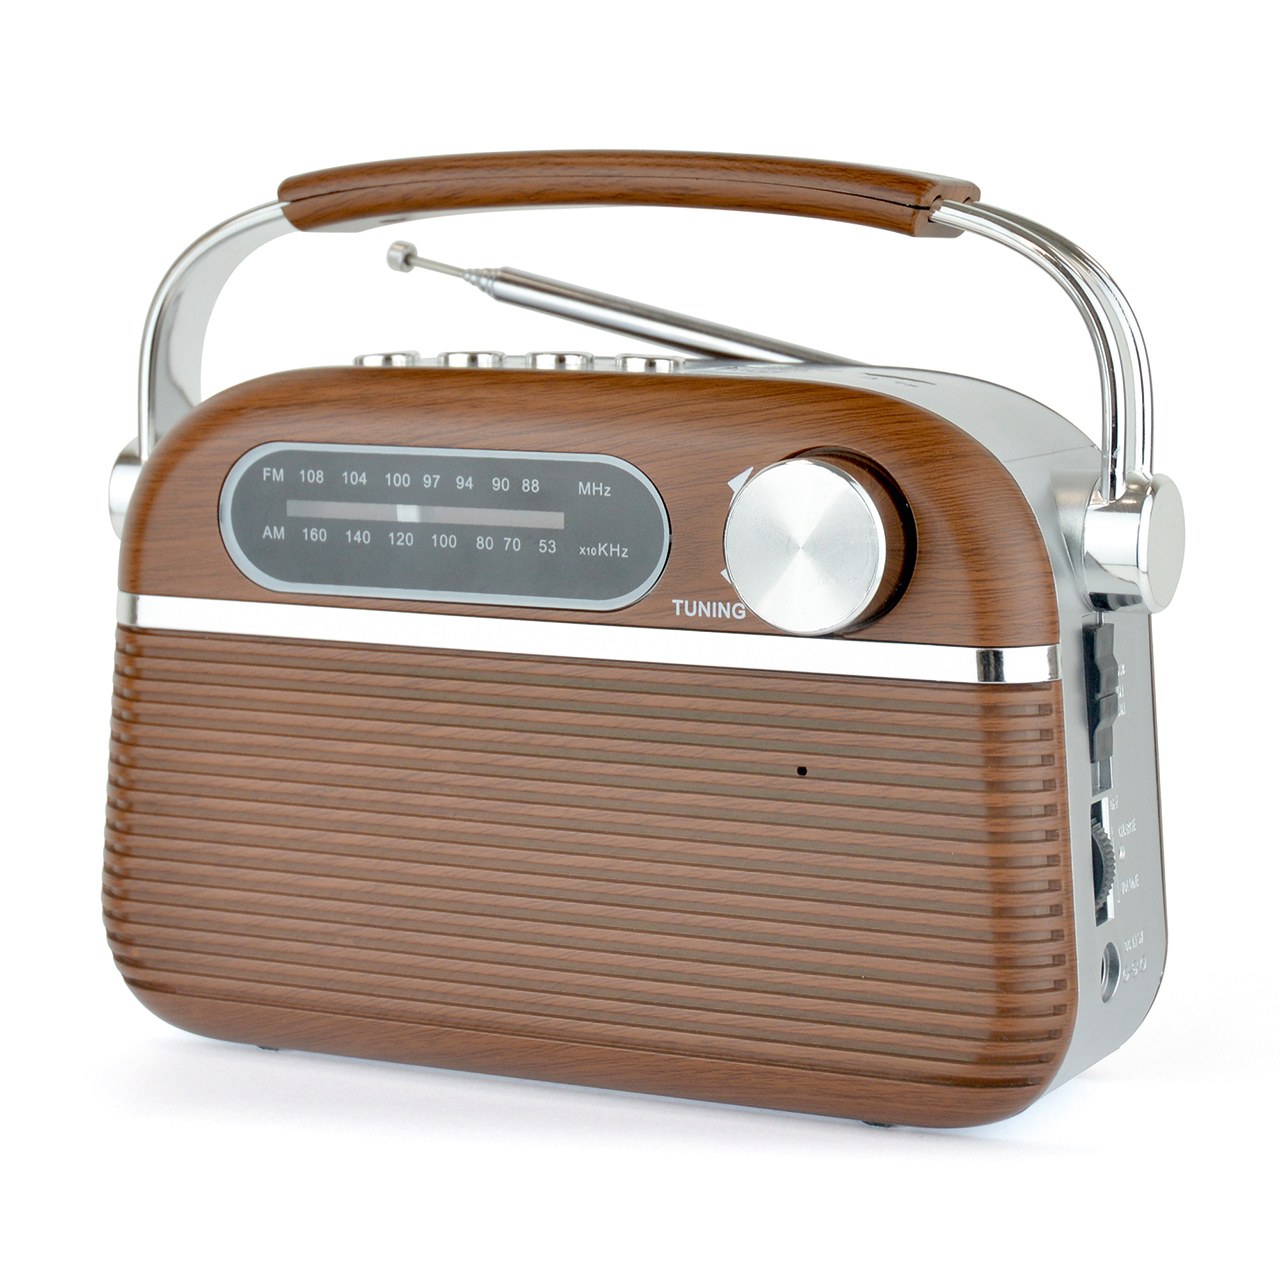 Vintage Style Portable Radio